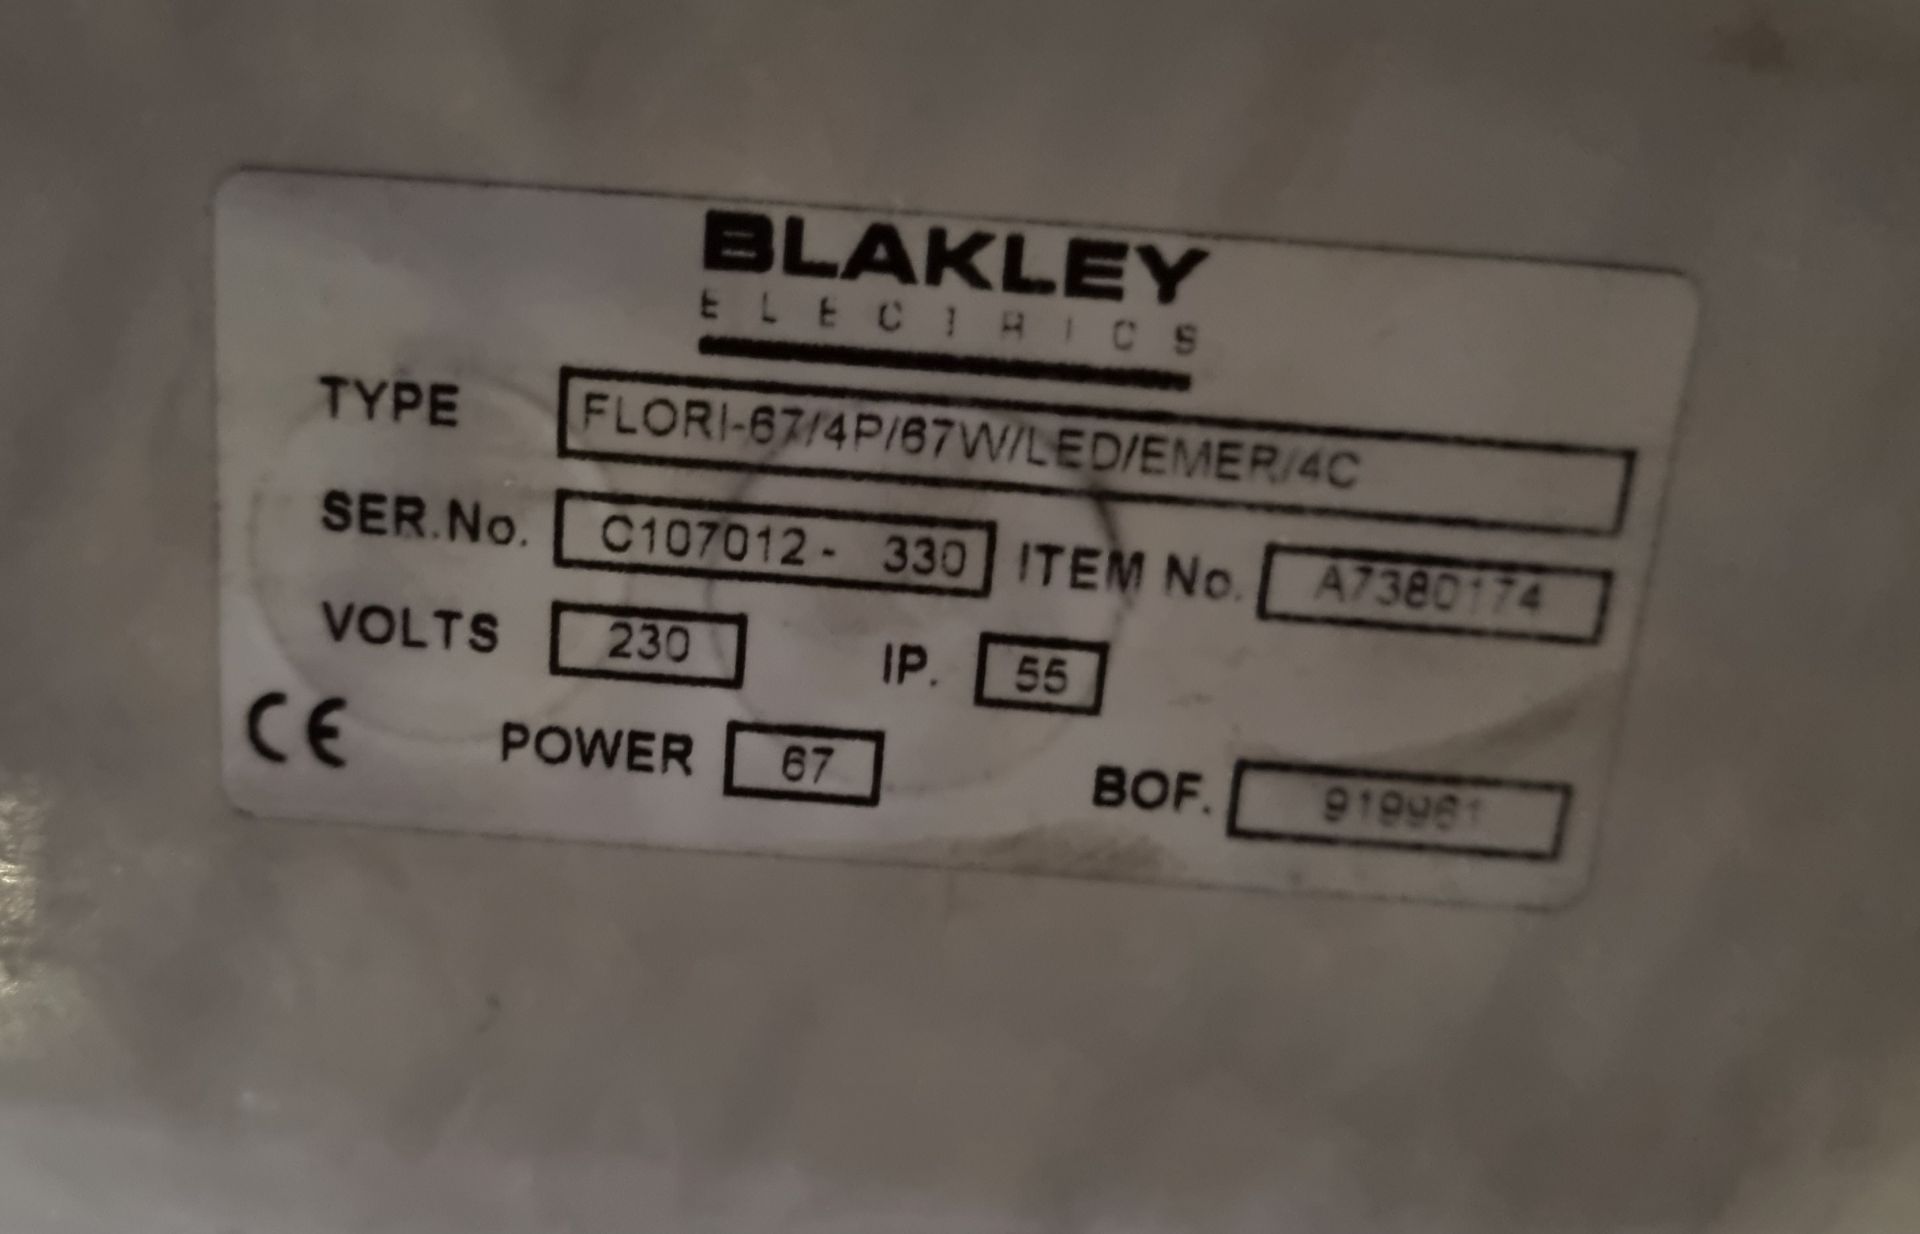 8x Blakley Light assemblies - 2x green cable FLORI-67/4P/67w/LED/EMER/4C, 6x Black cable FLORI-67/4P - Image 5 of 5